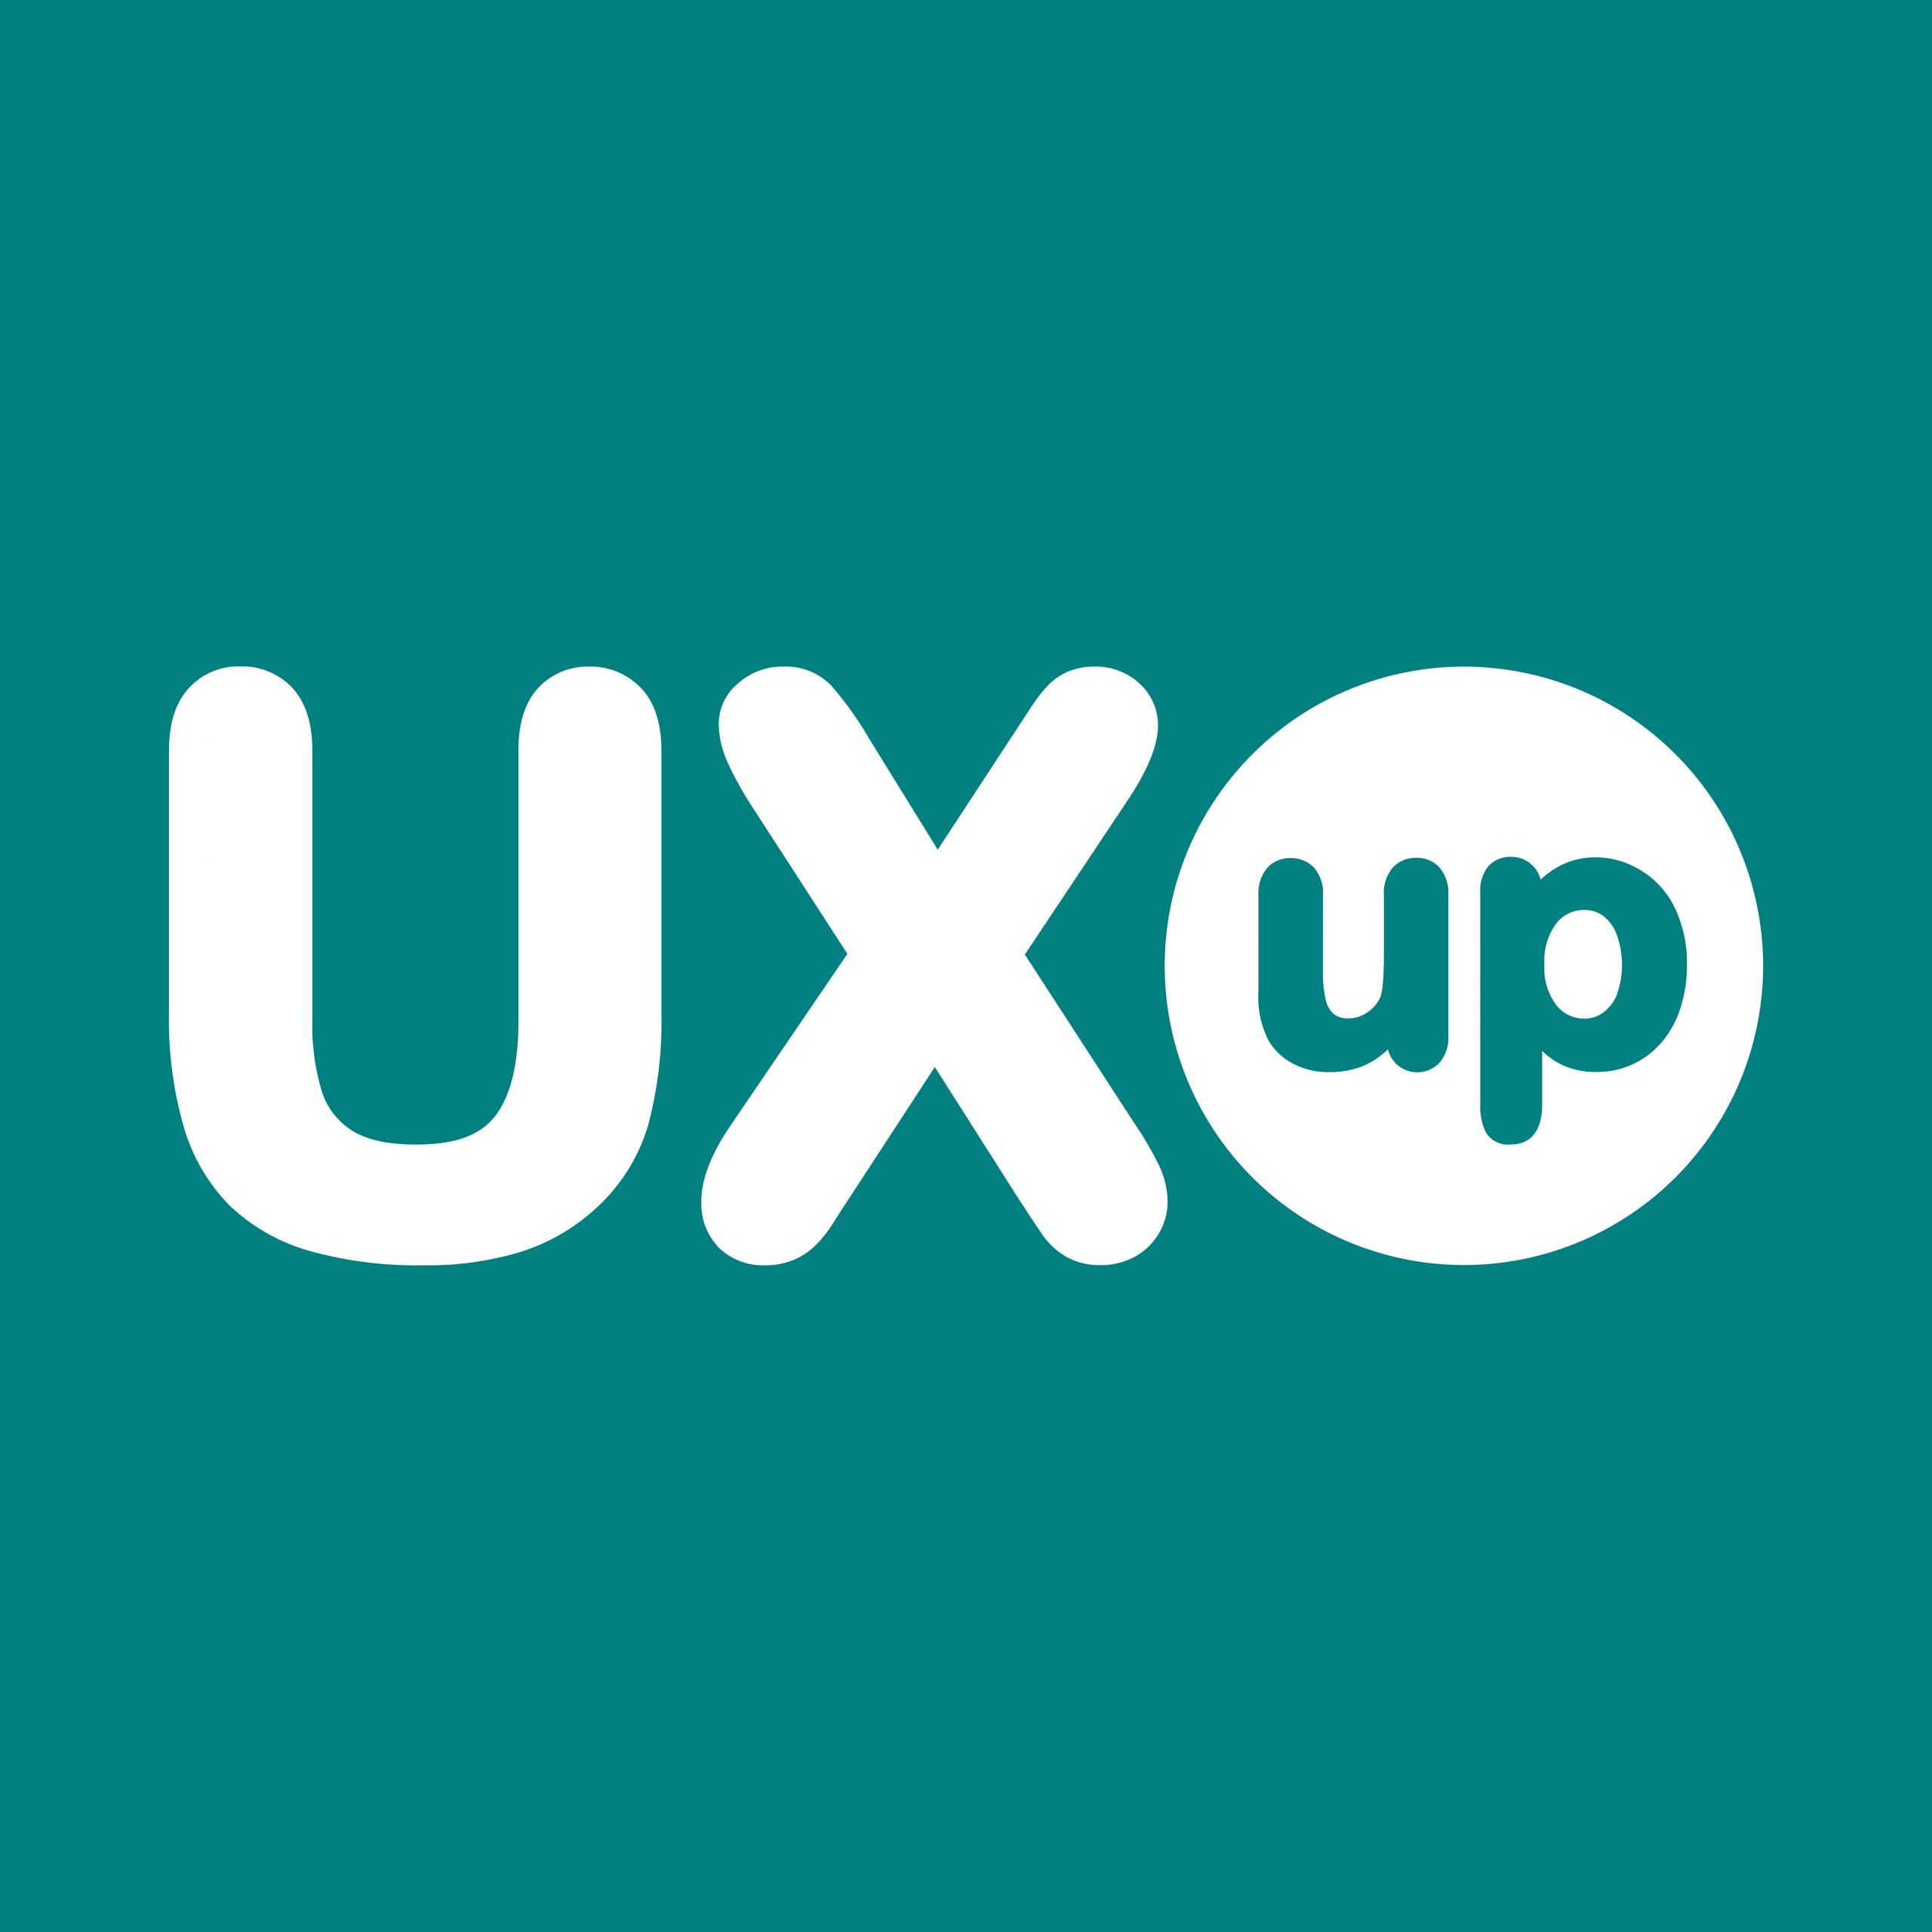 UXup Brighton